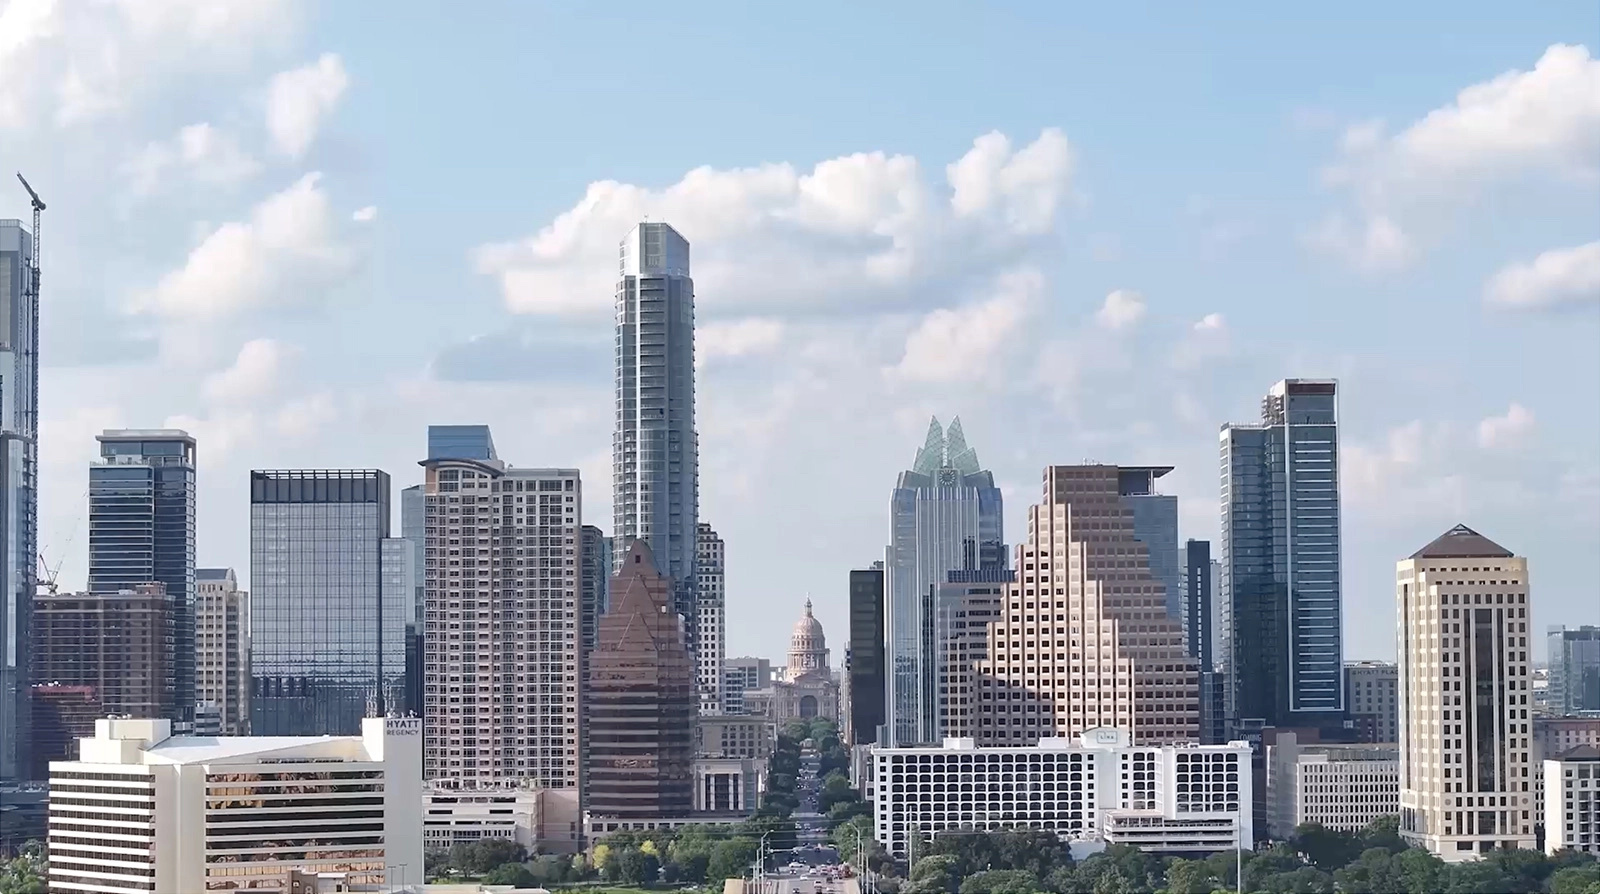 Downtown skyline of Austin Texas